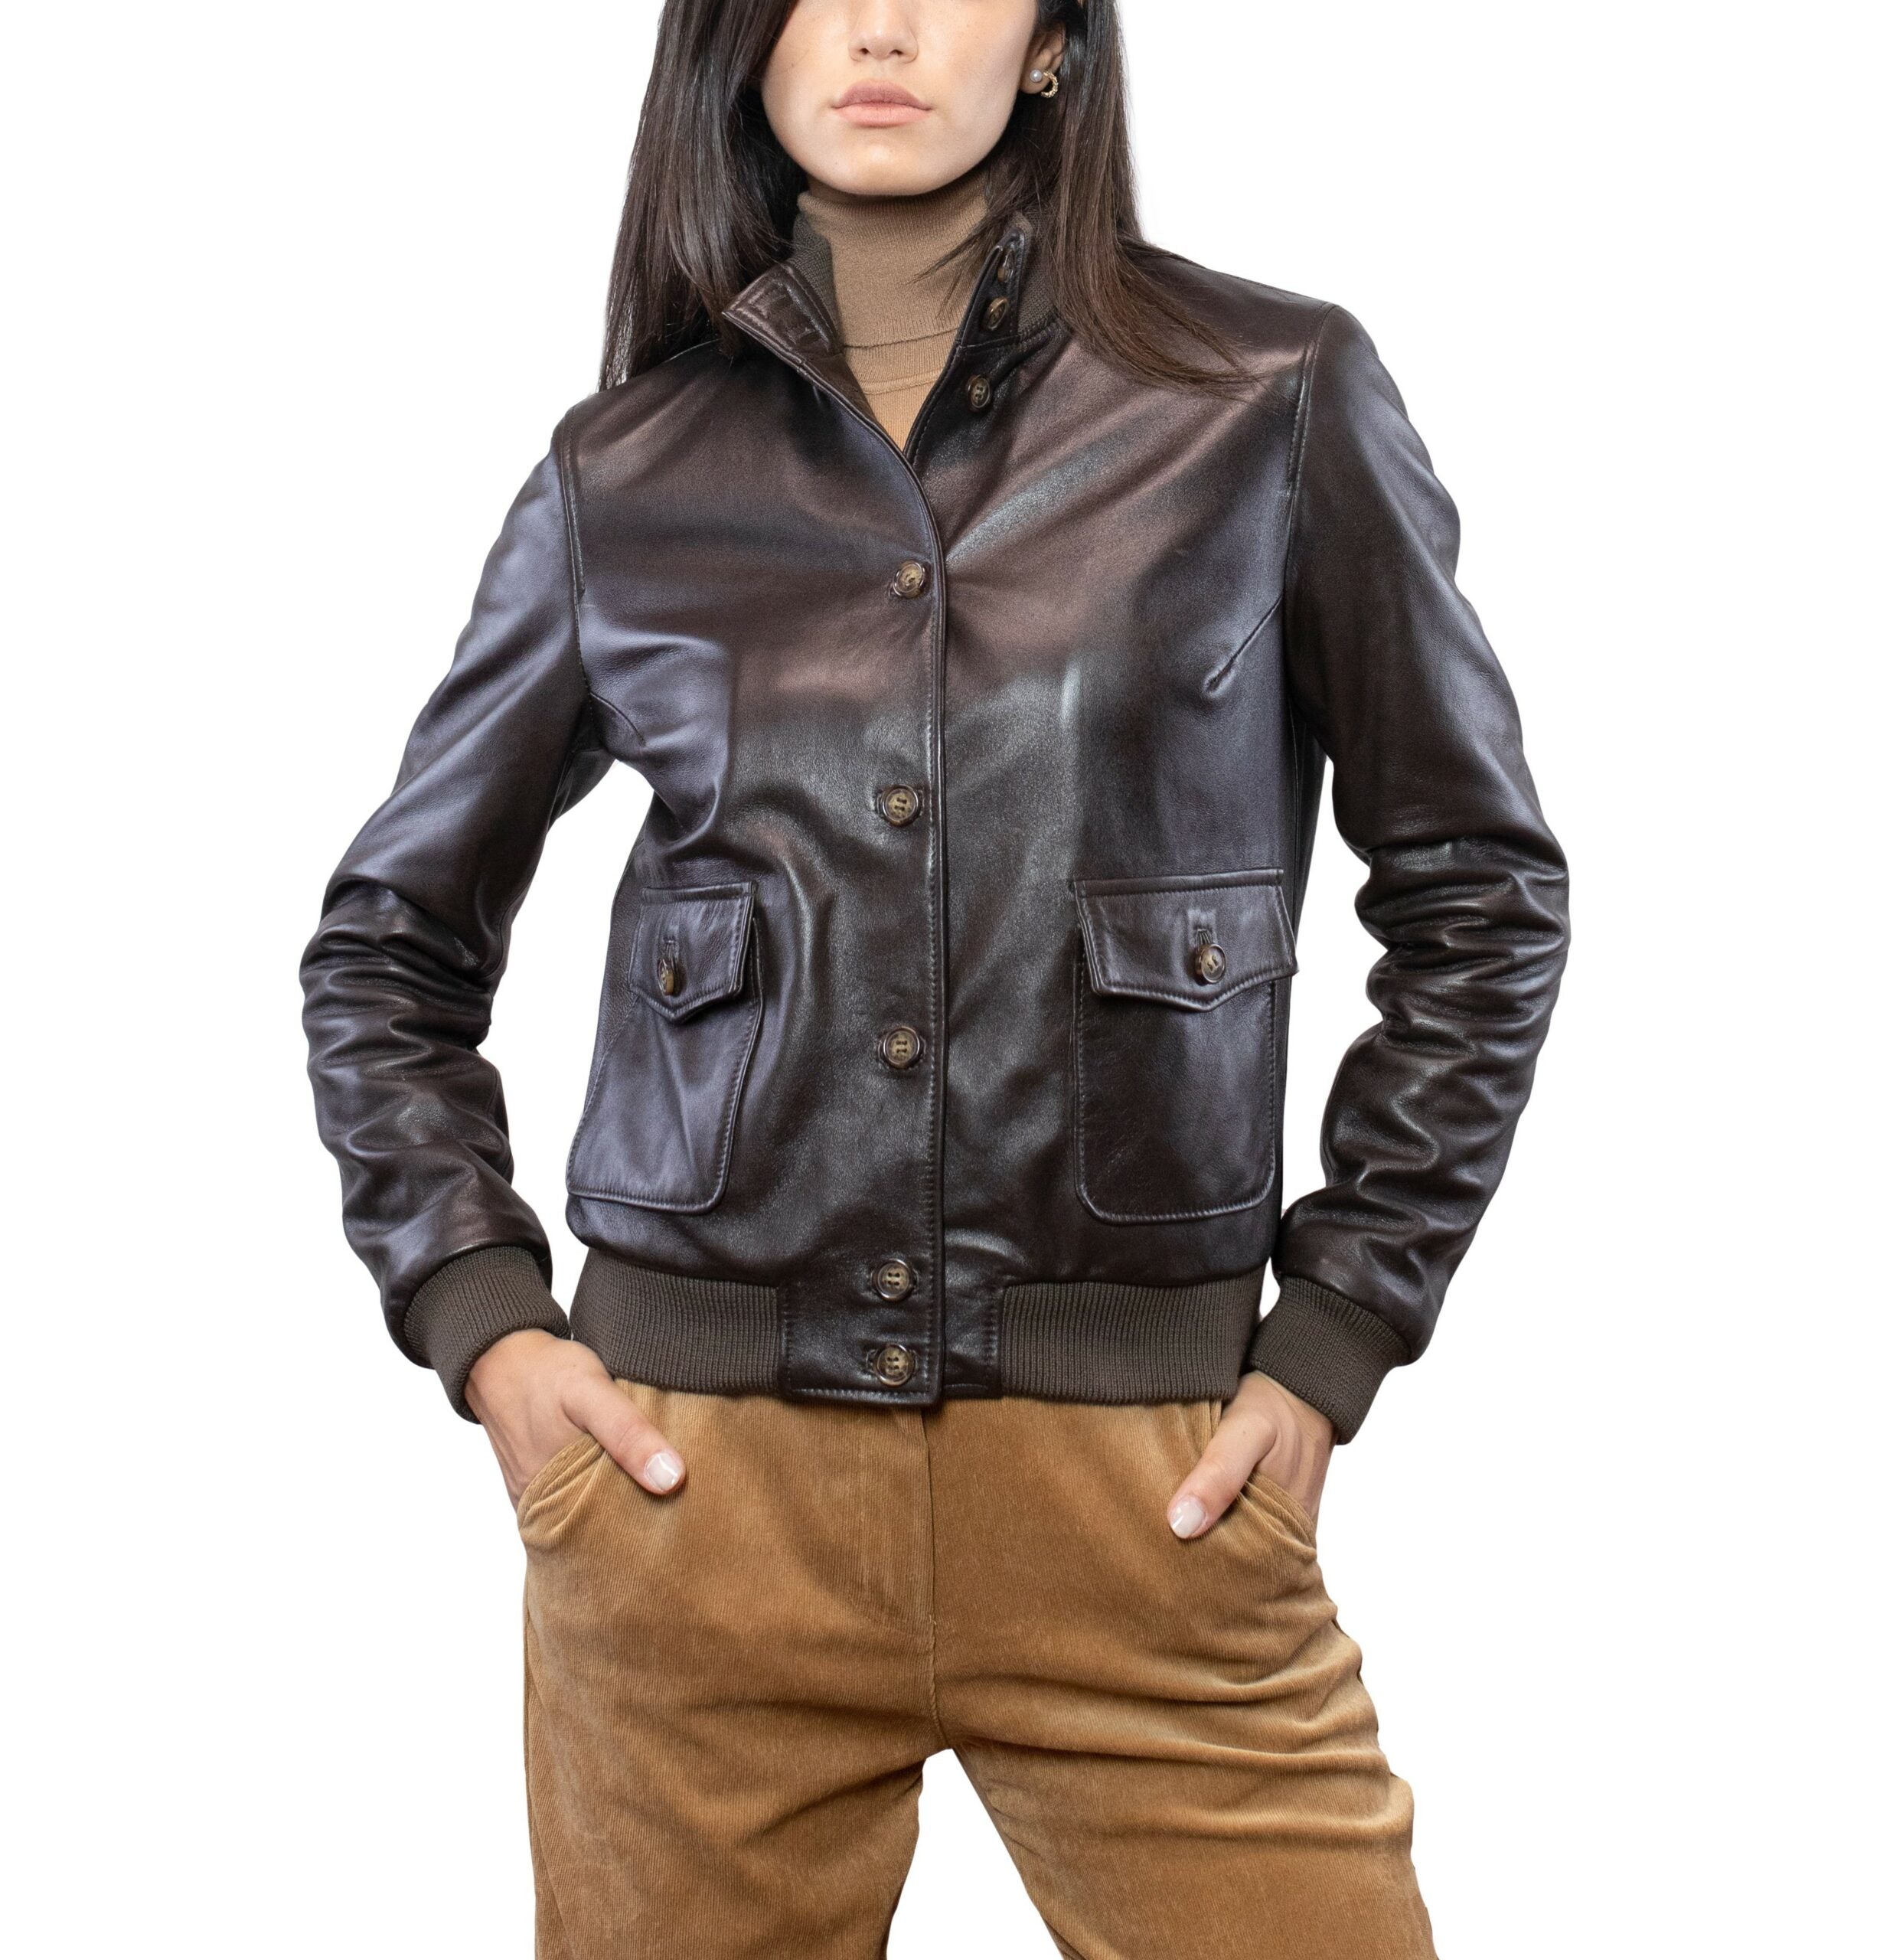 25LNABR leather jacket